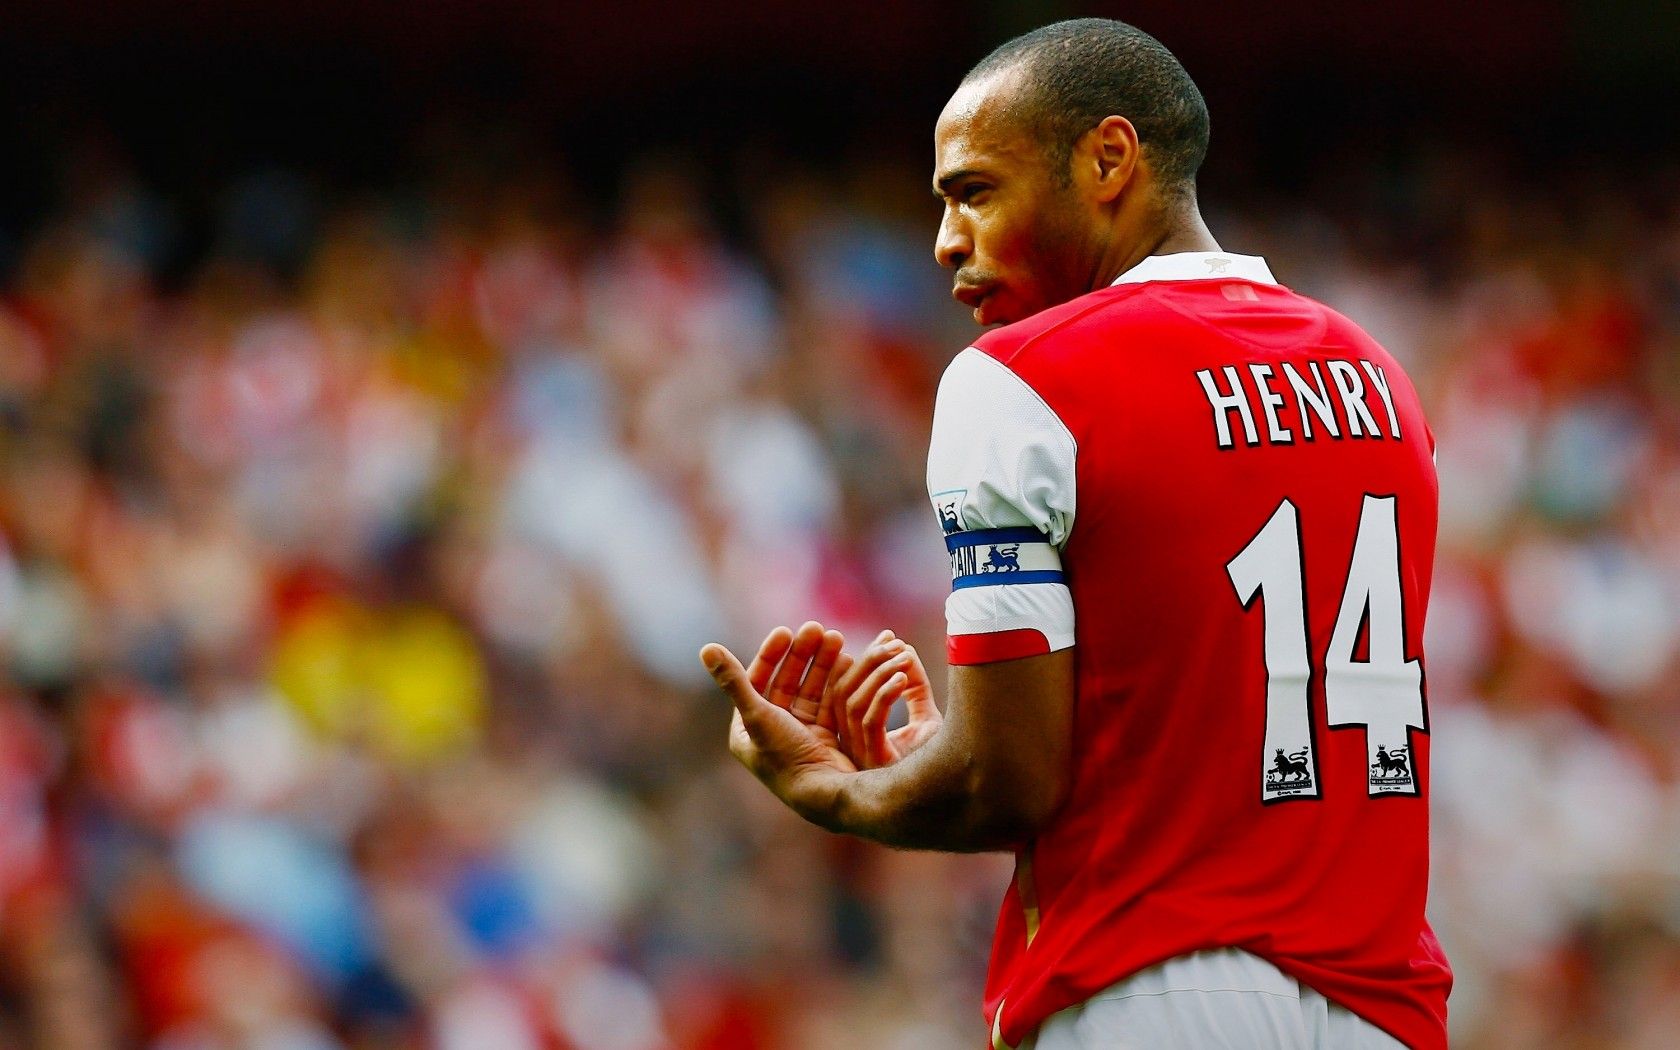 Fonds d'écran Thierry Henry Arsenal : tous les wallpapers Thierry ...